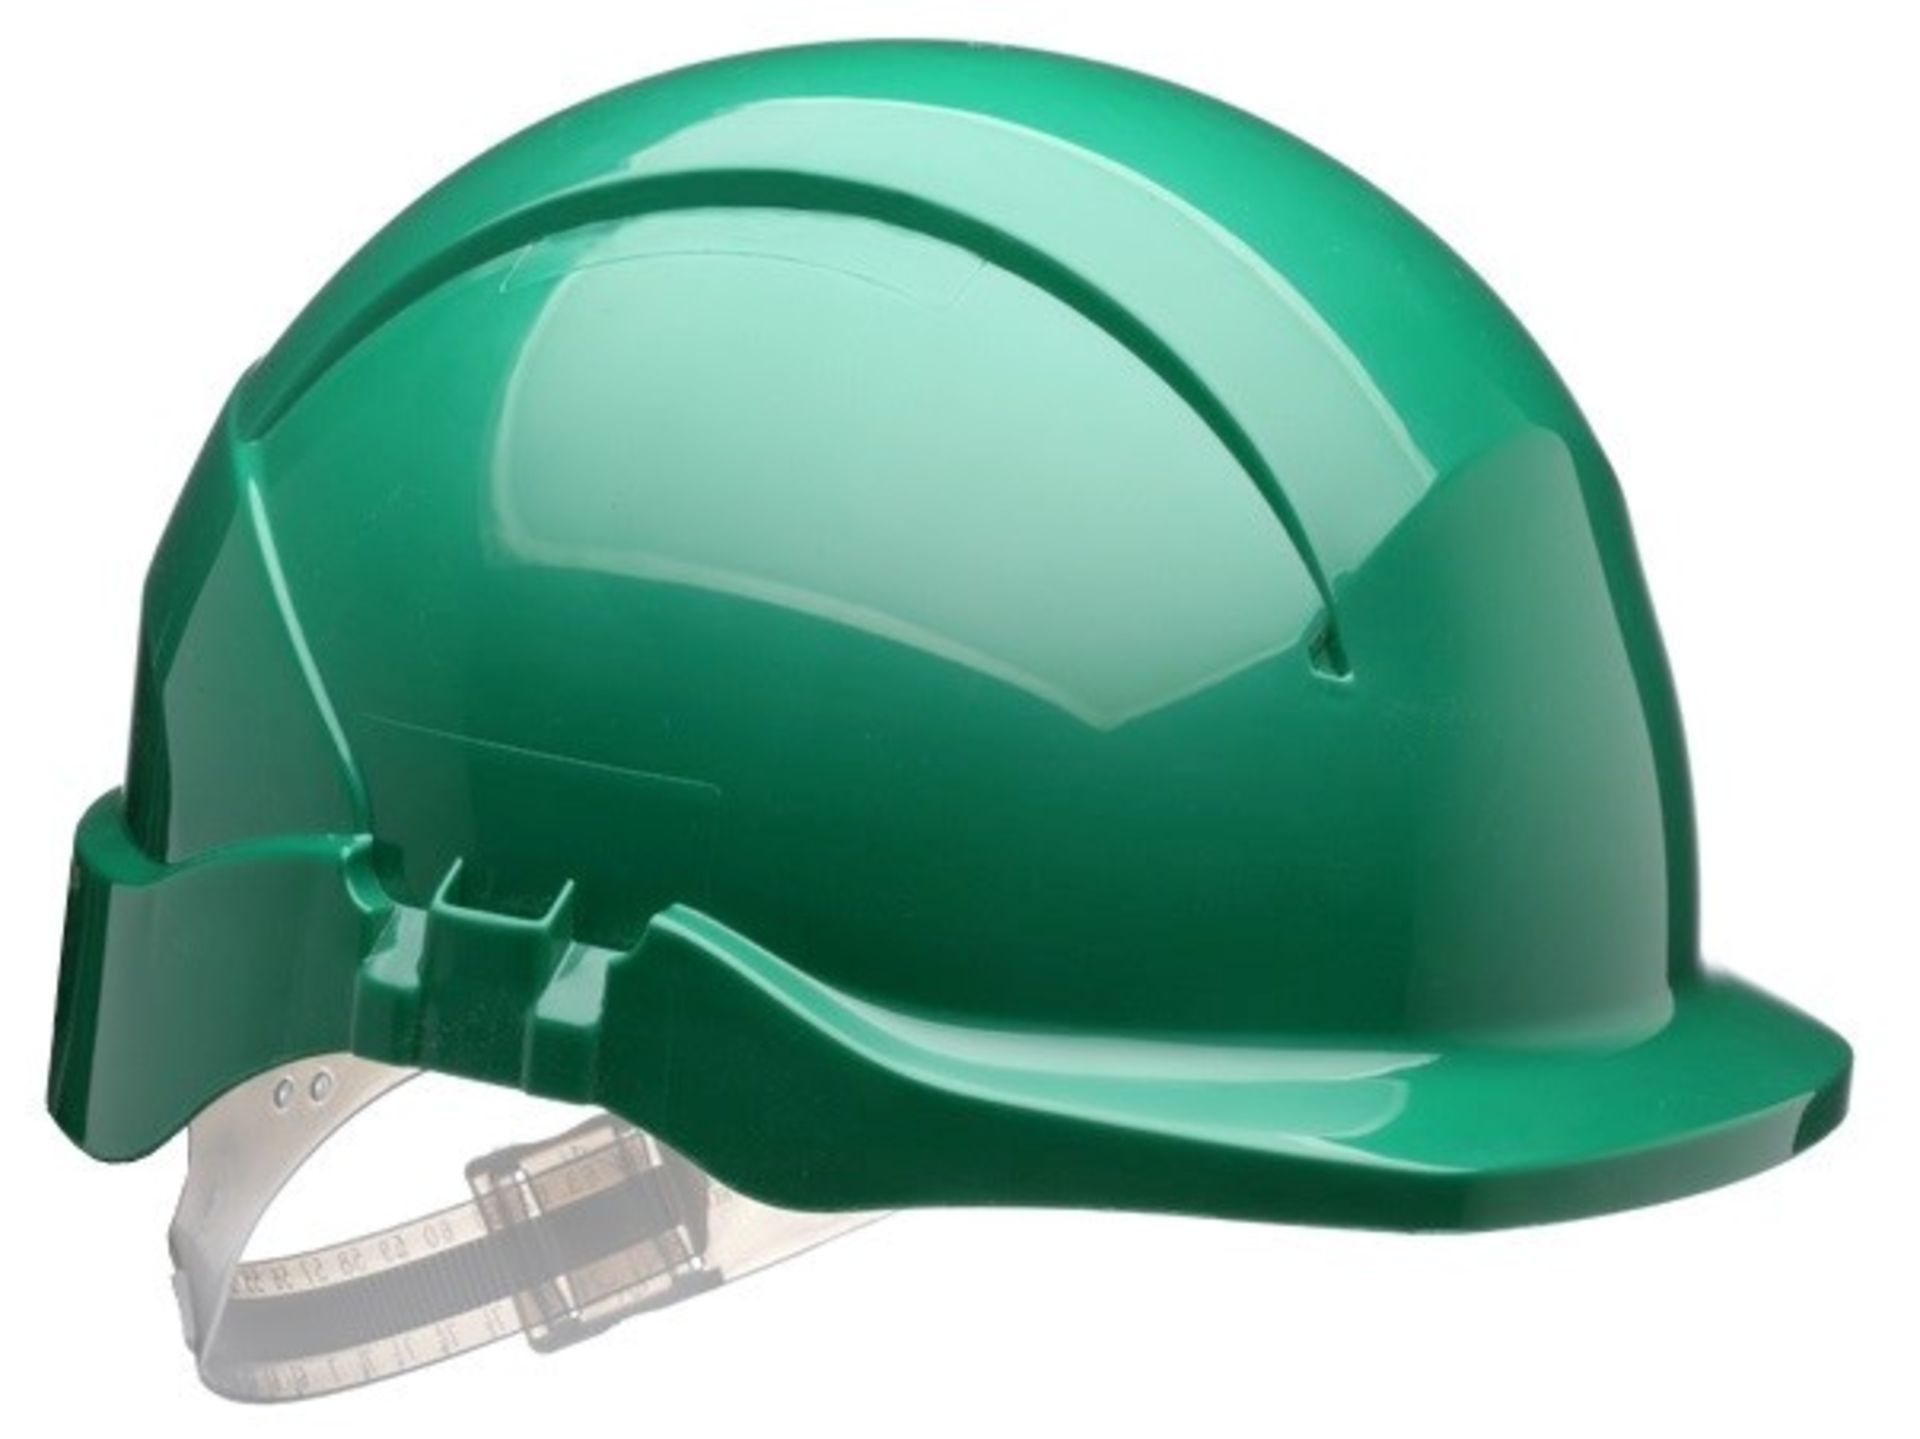 7 x Centurion Concept Miners Helmet Green - CL185 - Ref: CEN/S09FSH/GRN/P48 A - New Stock -